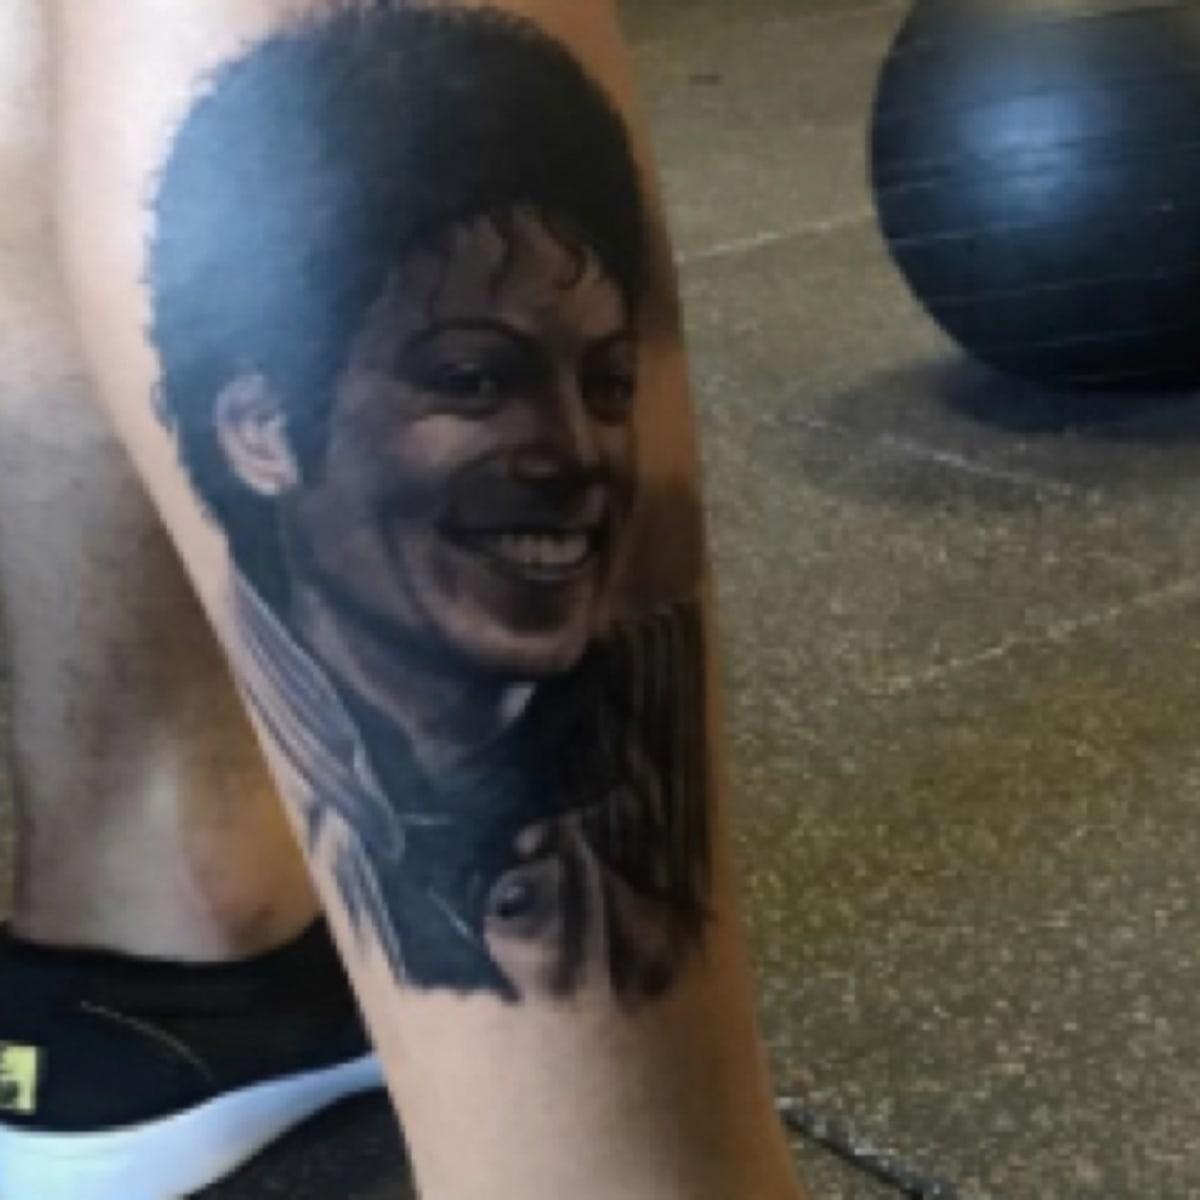 Odell Beckham Jrs 86 Tattoos  Their Meanings  Body Art Guru